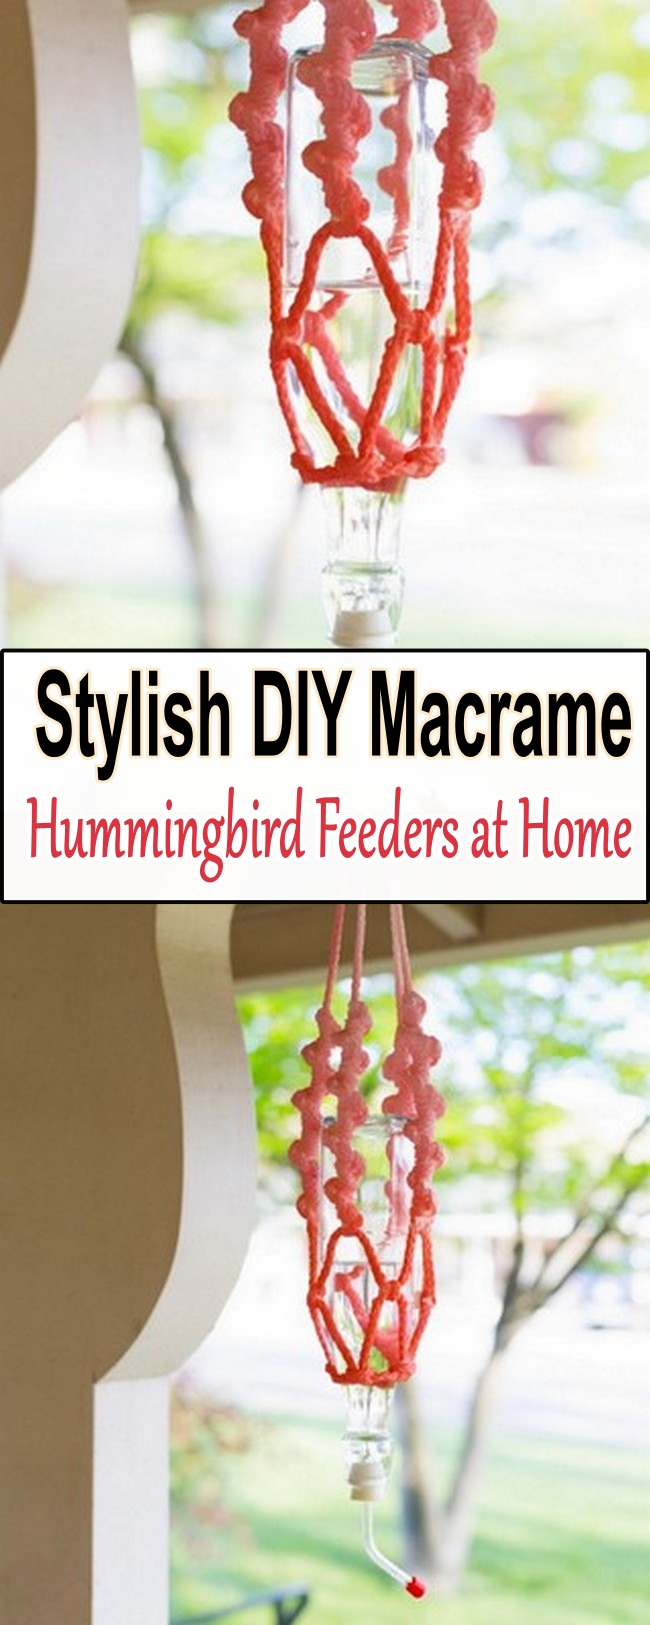 Stylish DIY Macrame Hummingbird Feeders at Home